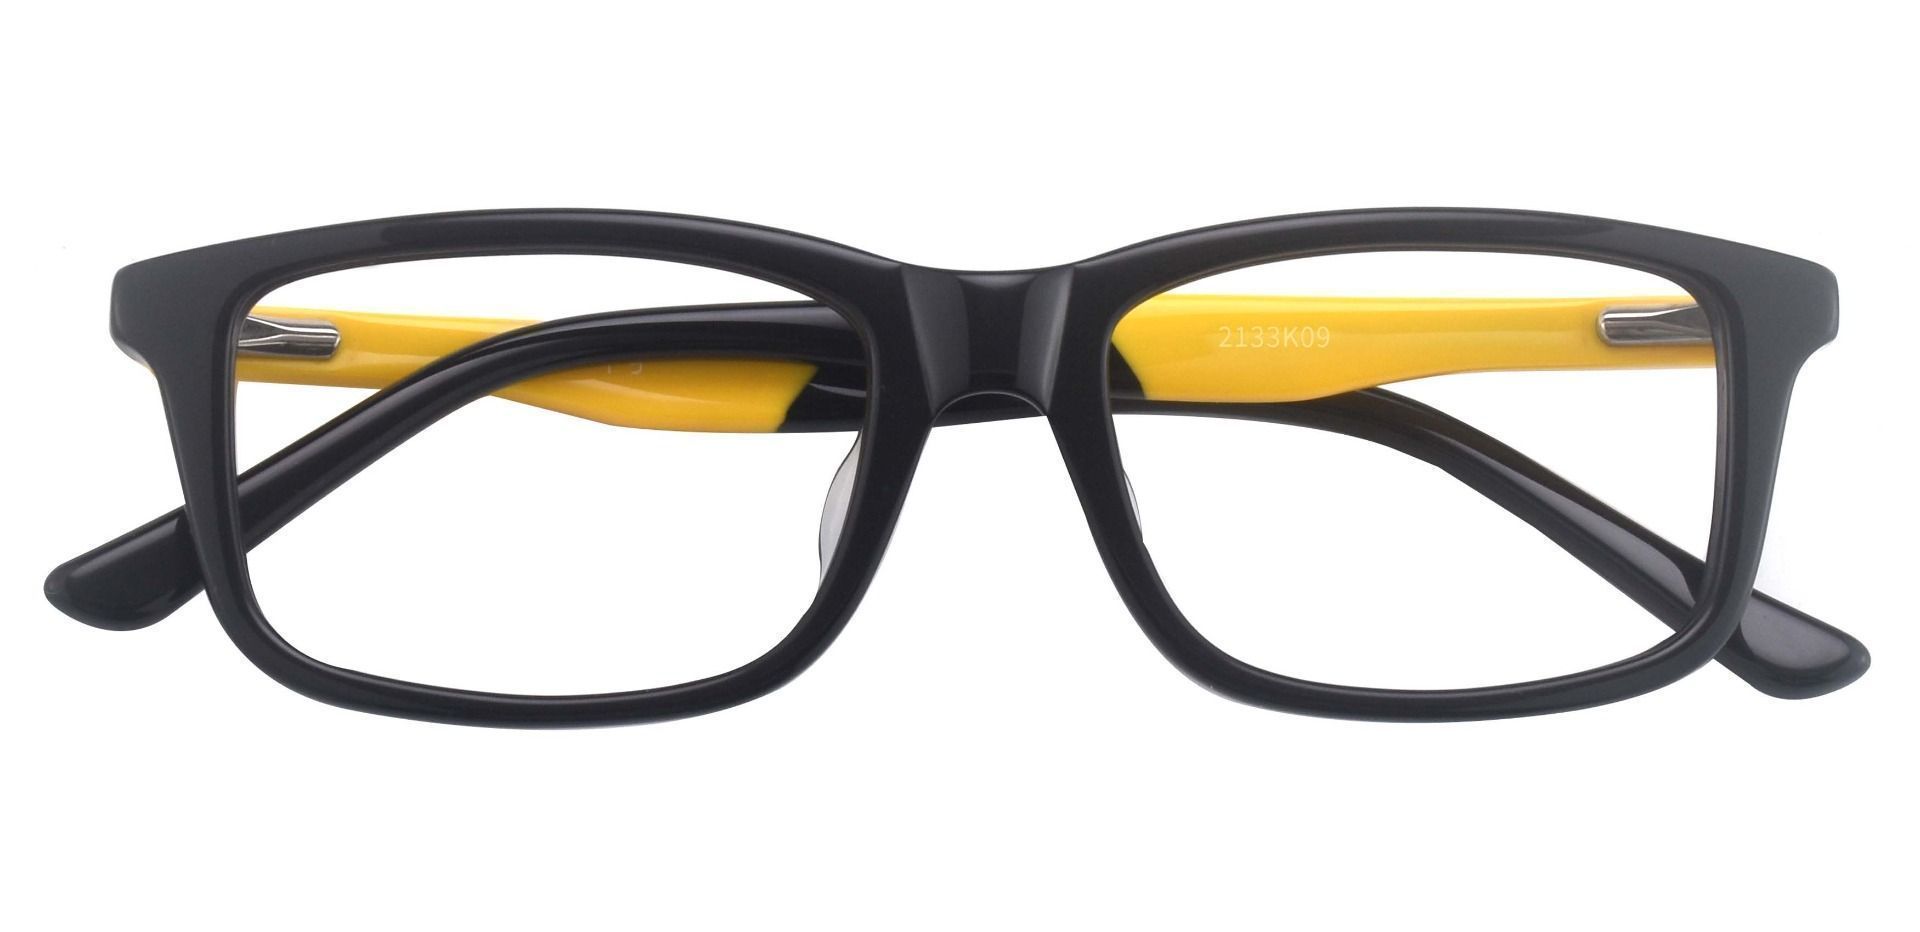 Allegheny Rectangle Blue Light Blocking Glasses - Black-yellow